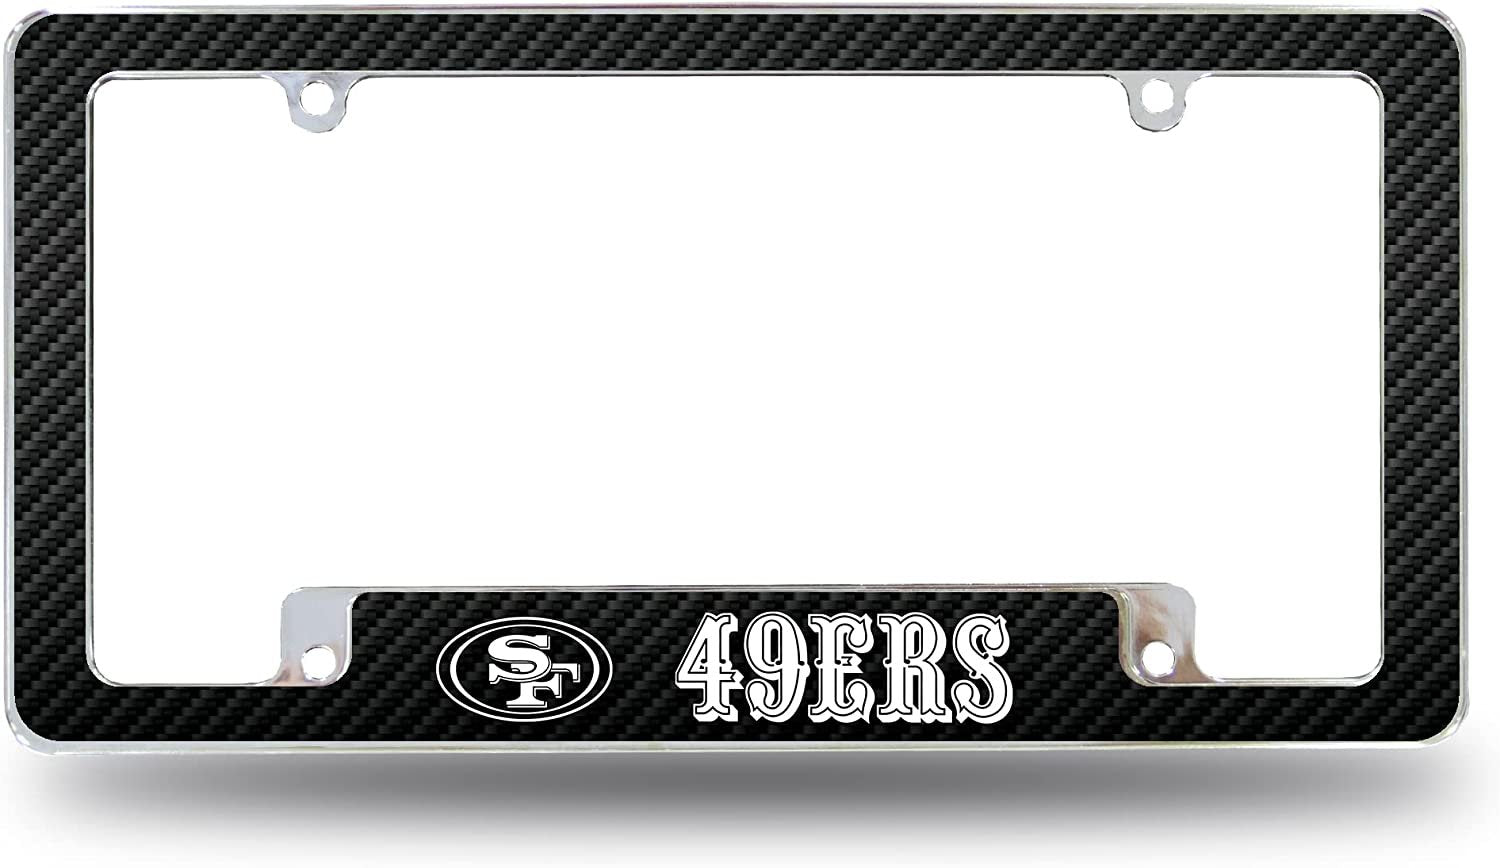 San Francisco 49ers Metal License Plate Frame Chrome Tag Cover Carbon Fiber Design 6x12 Inch